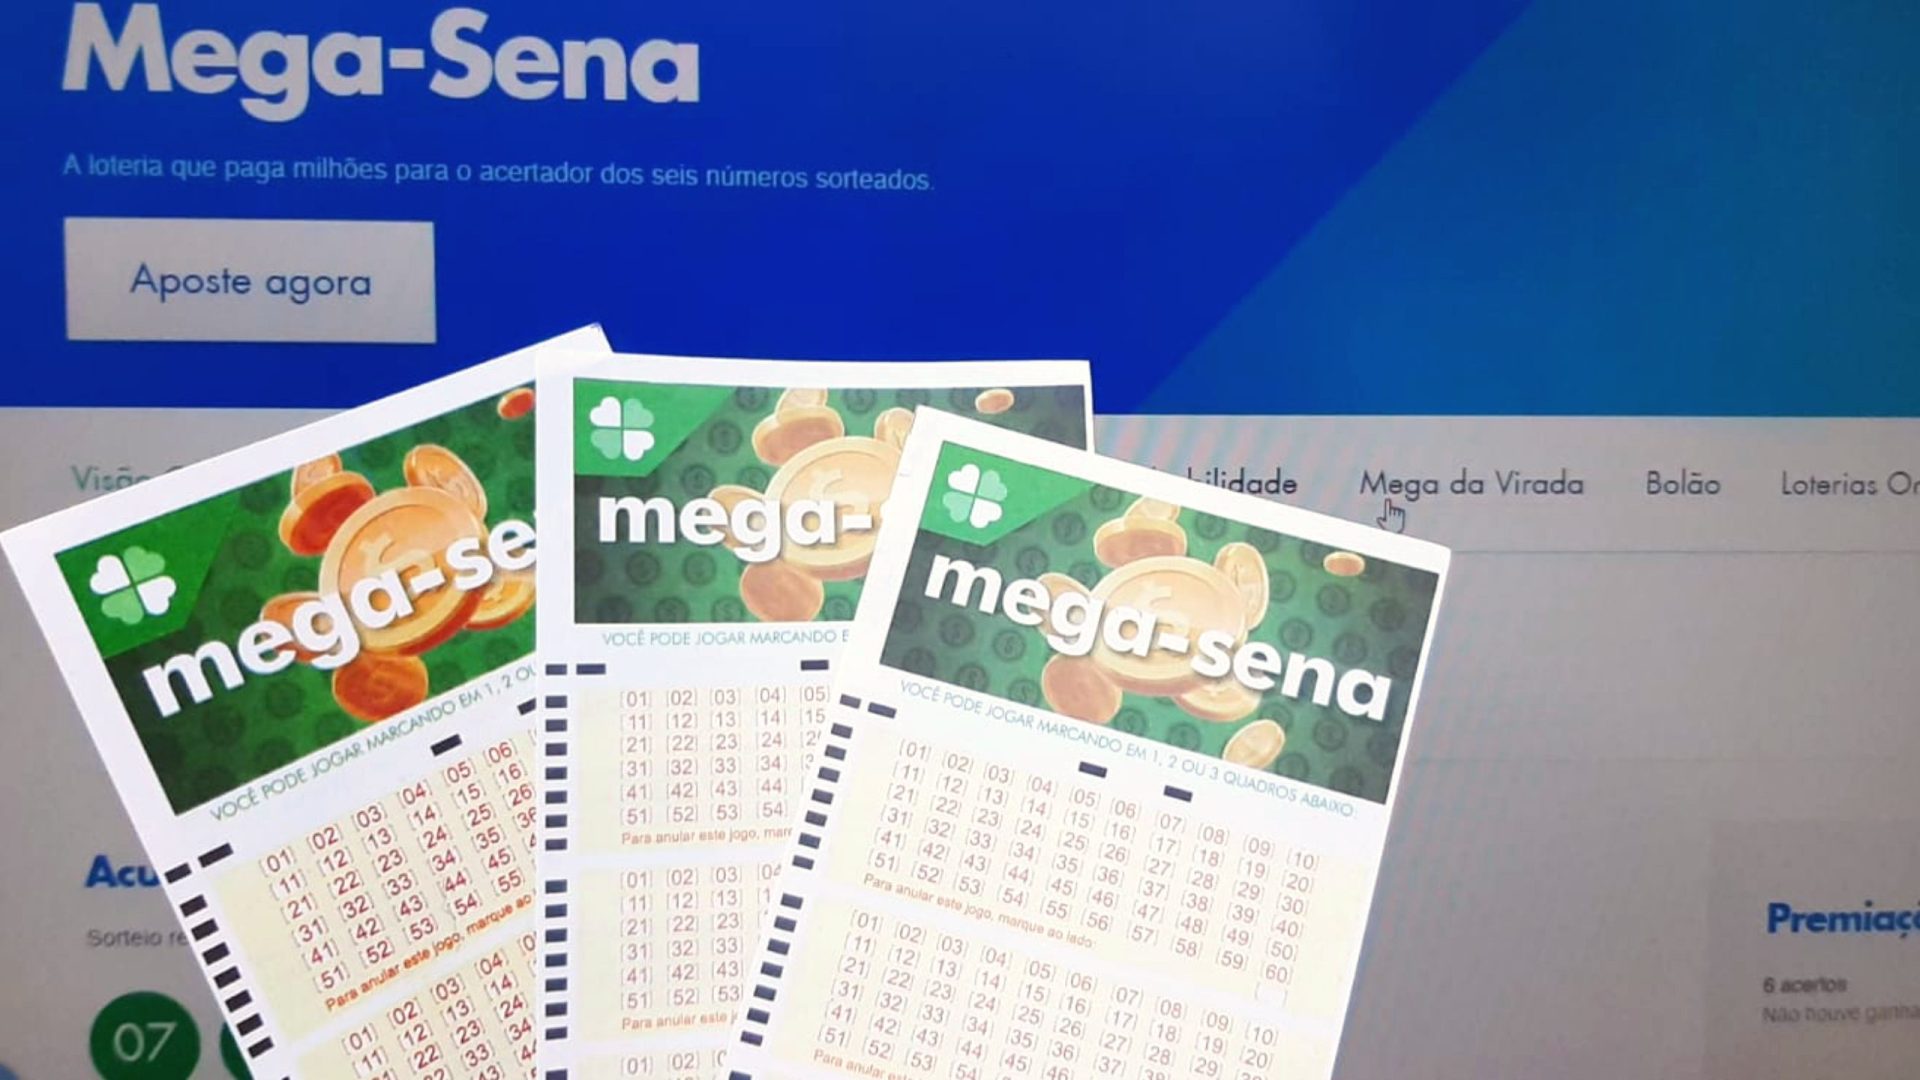 Mega-Sena e Mega-Semana sorteio no Brasil - Foto: Ana Kelly Franco/Portal